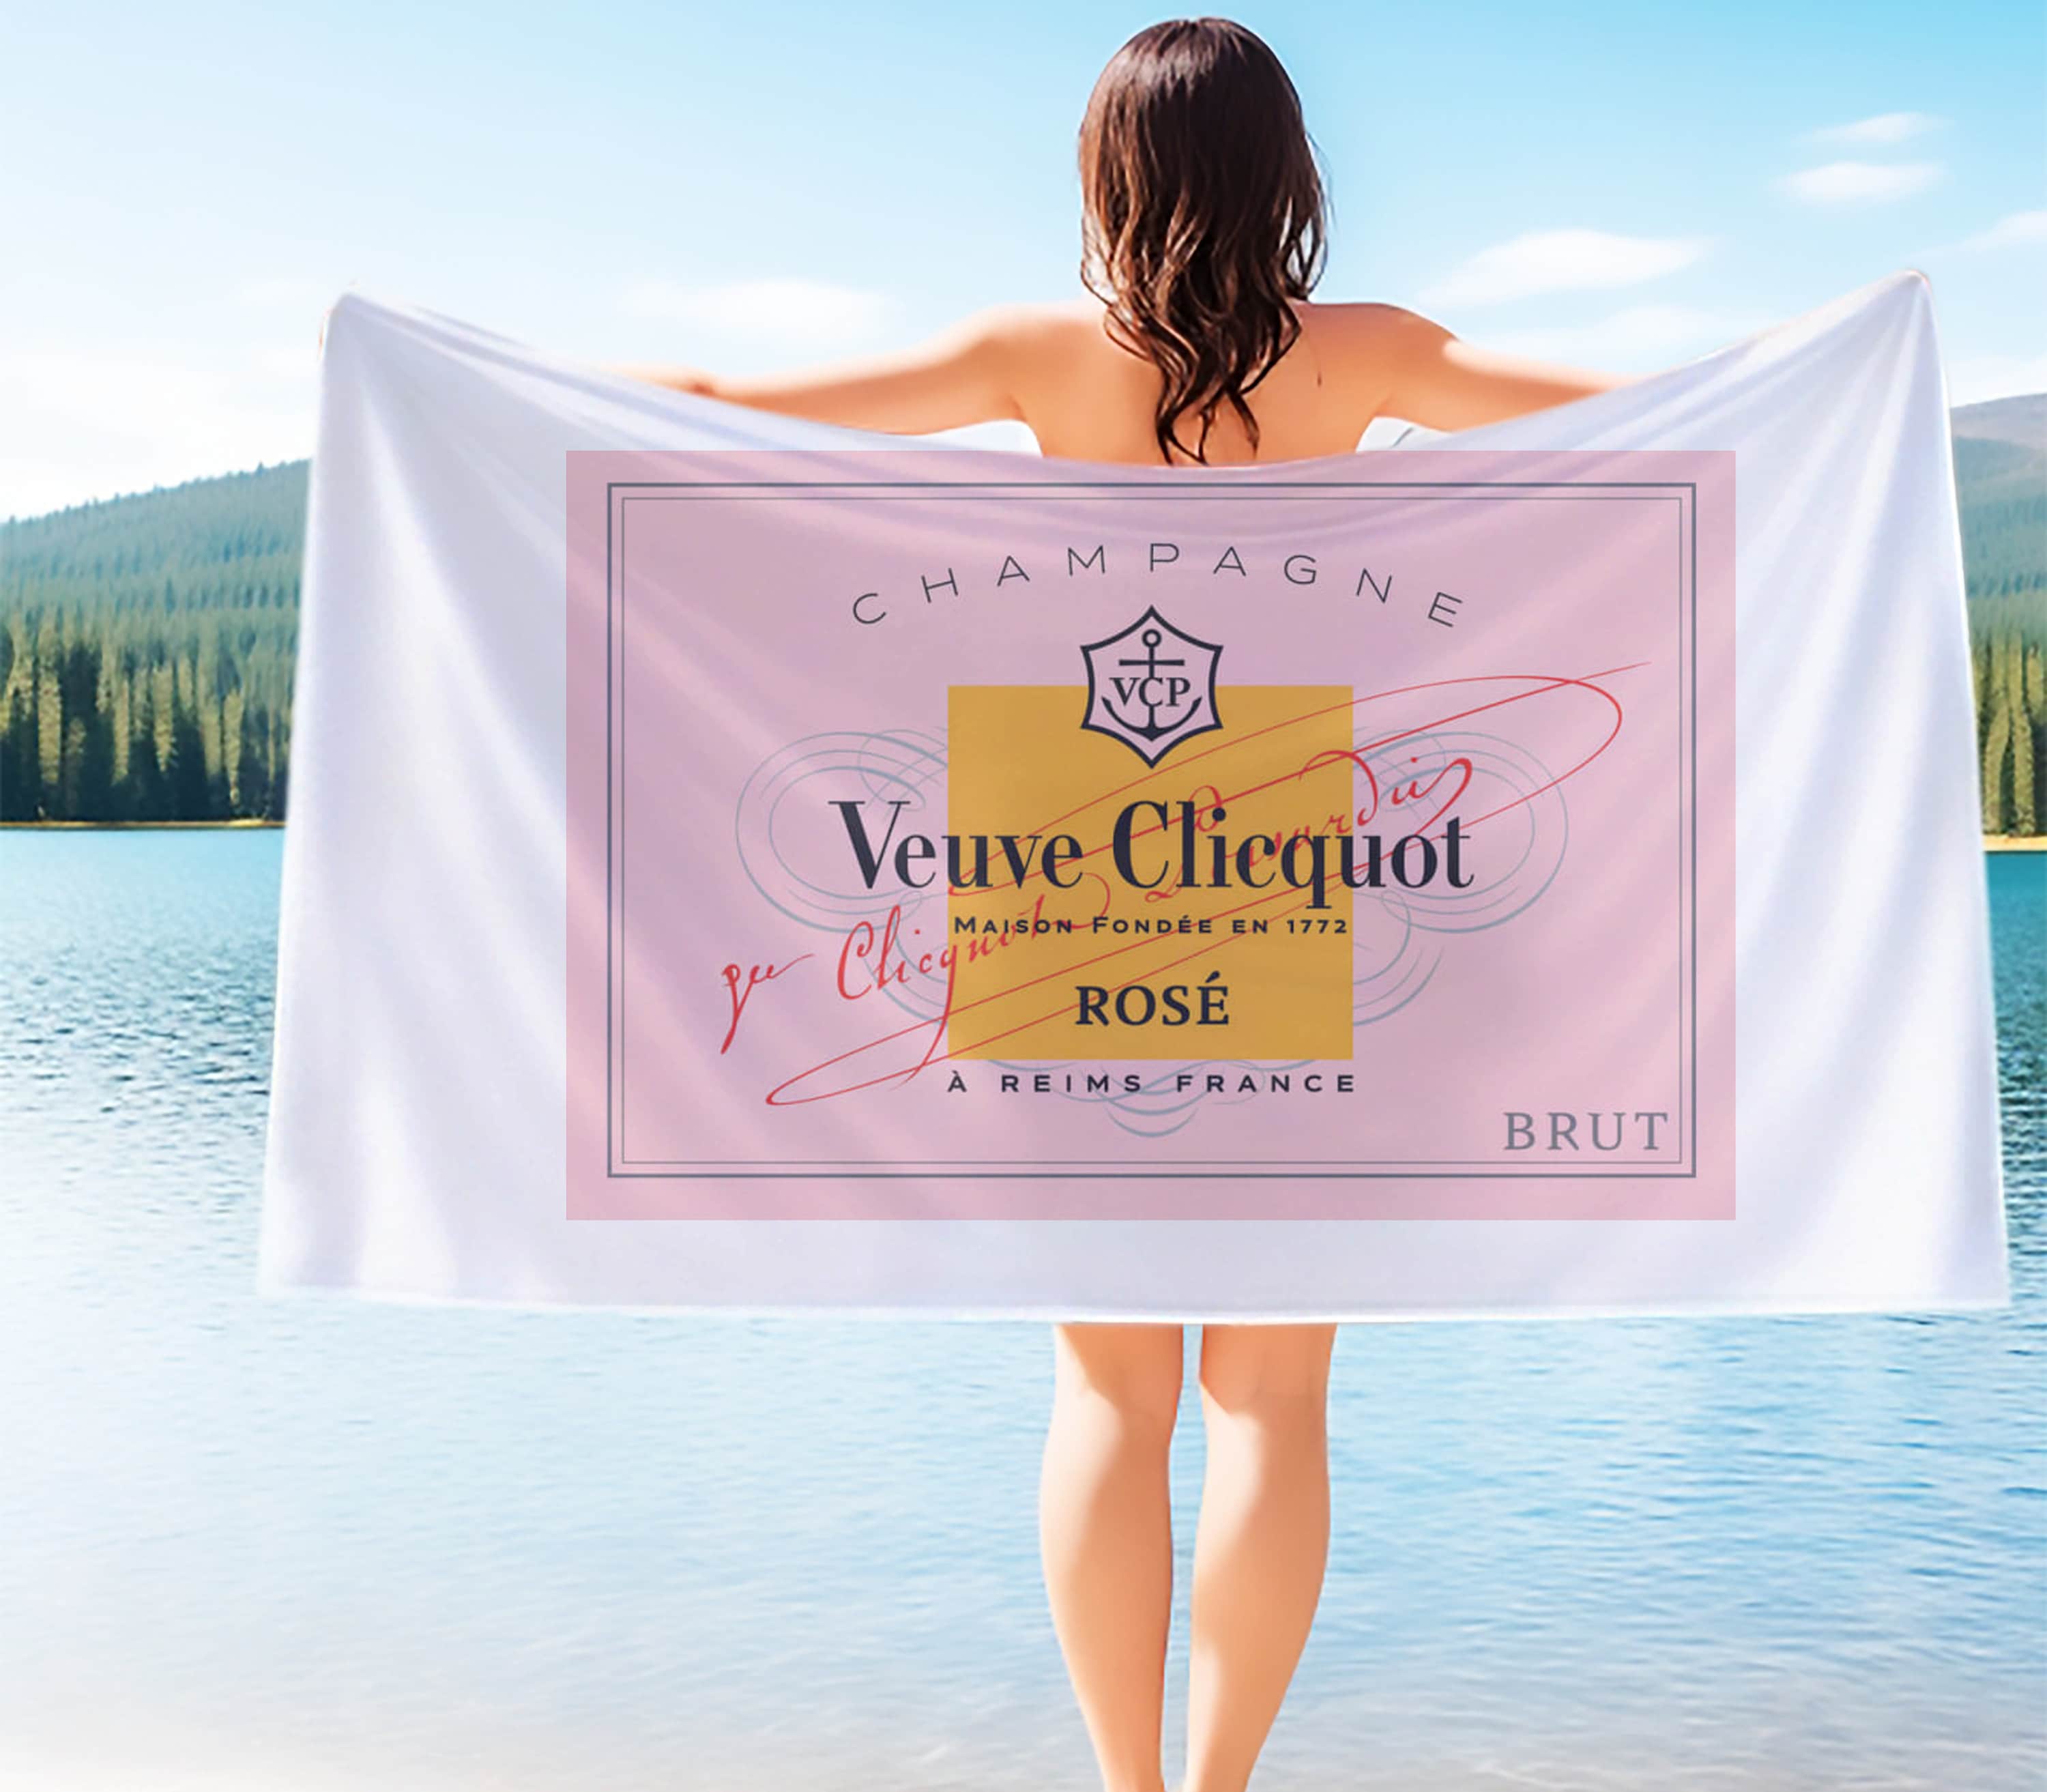 Chanel Beach Towel 